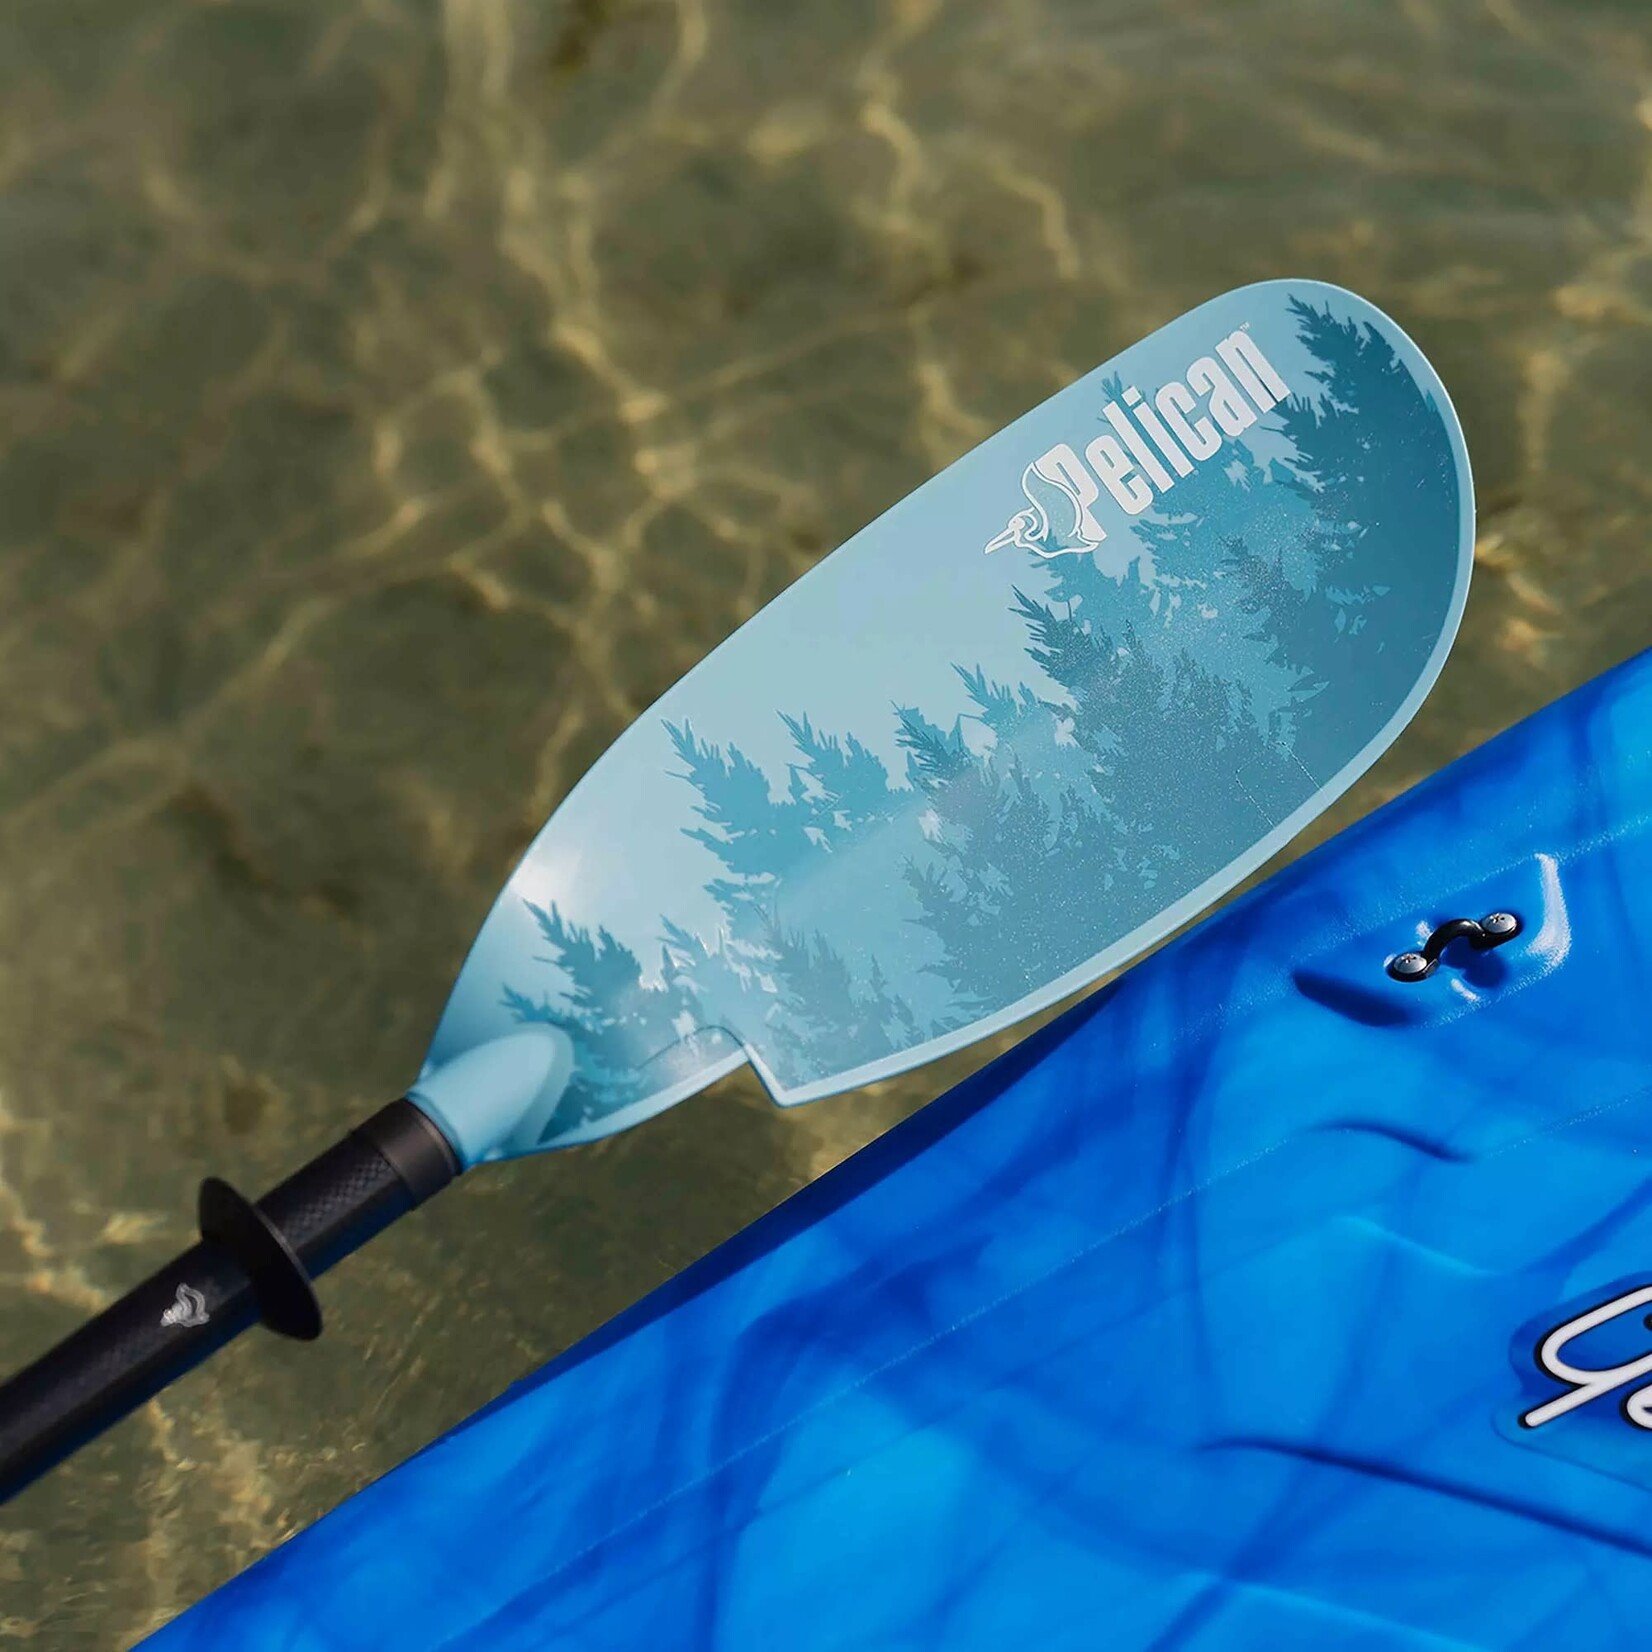 Pelican Sport Symbiosa 230-240 cm (pagaie de kayak)